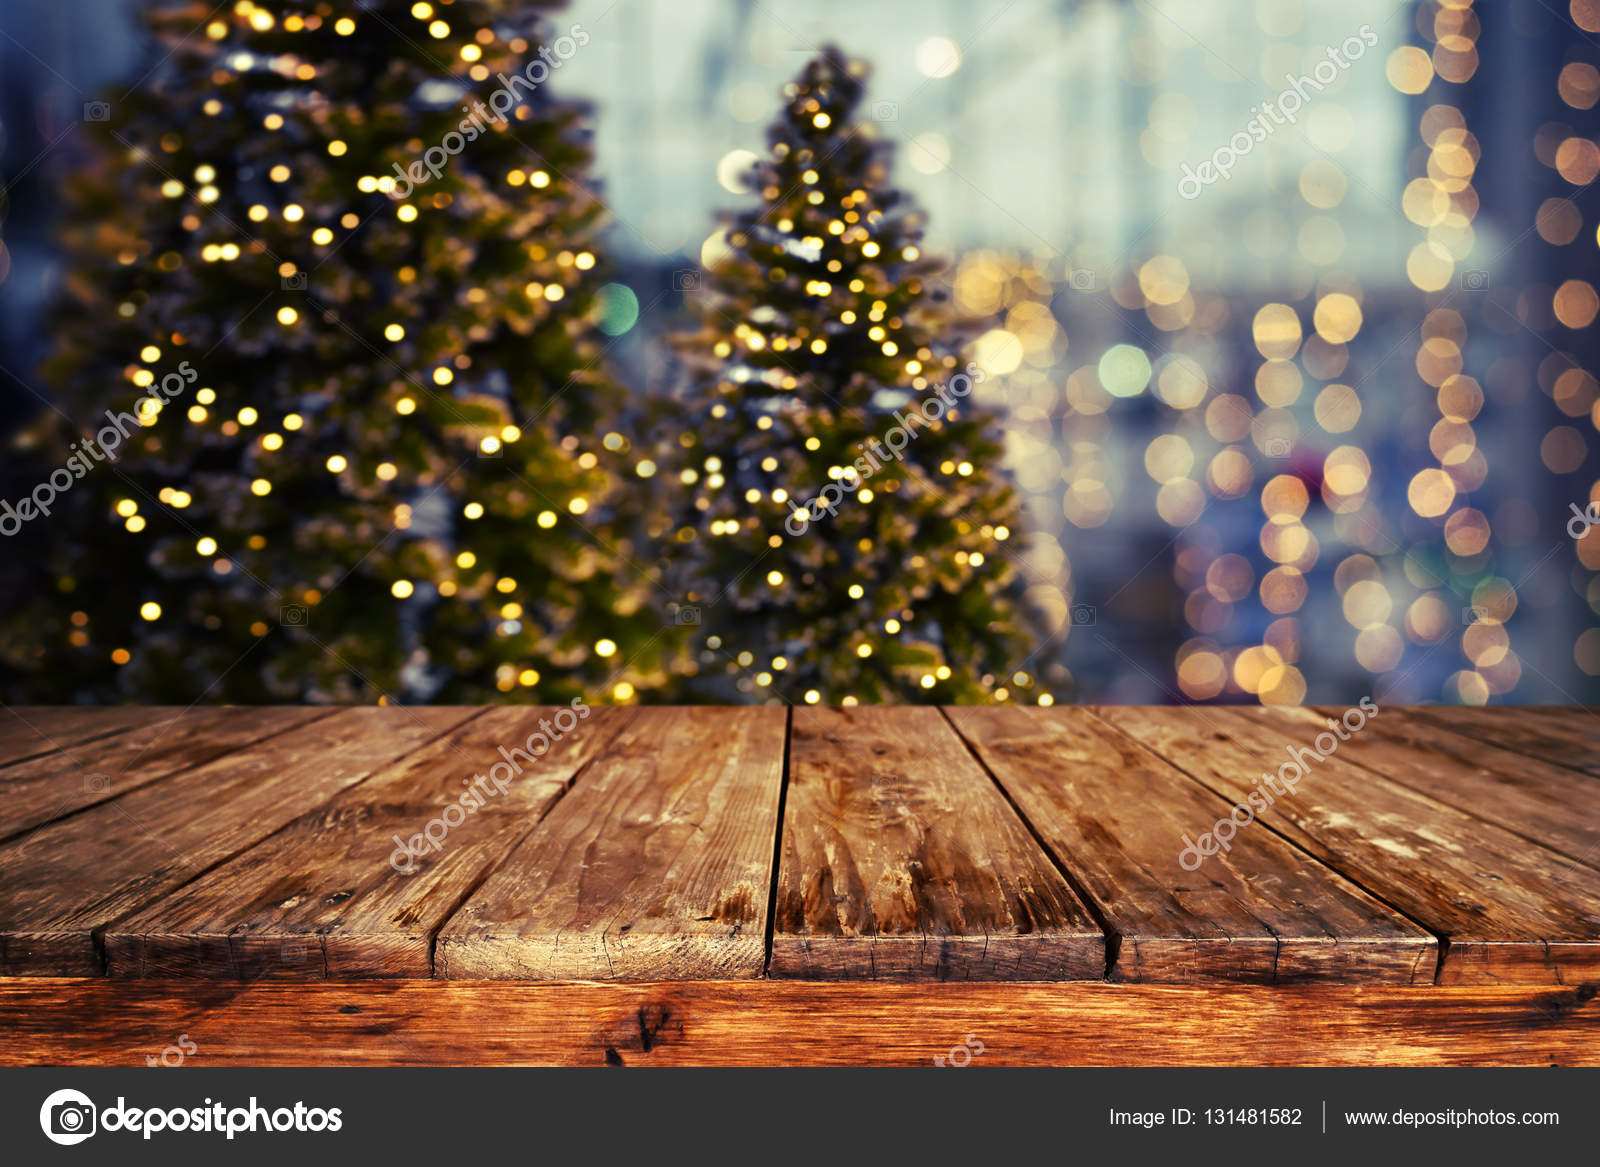 Christmas abstract blur background Stock Photo by ©jakkapan 131481582